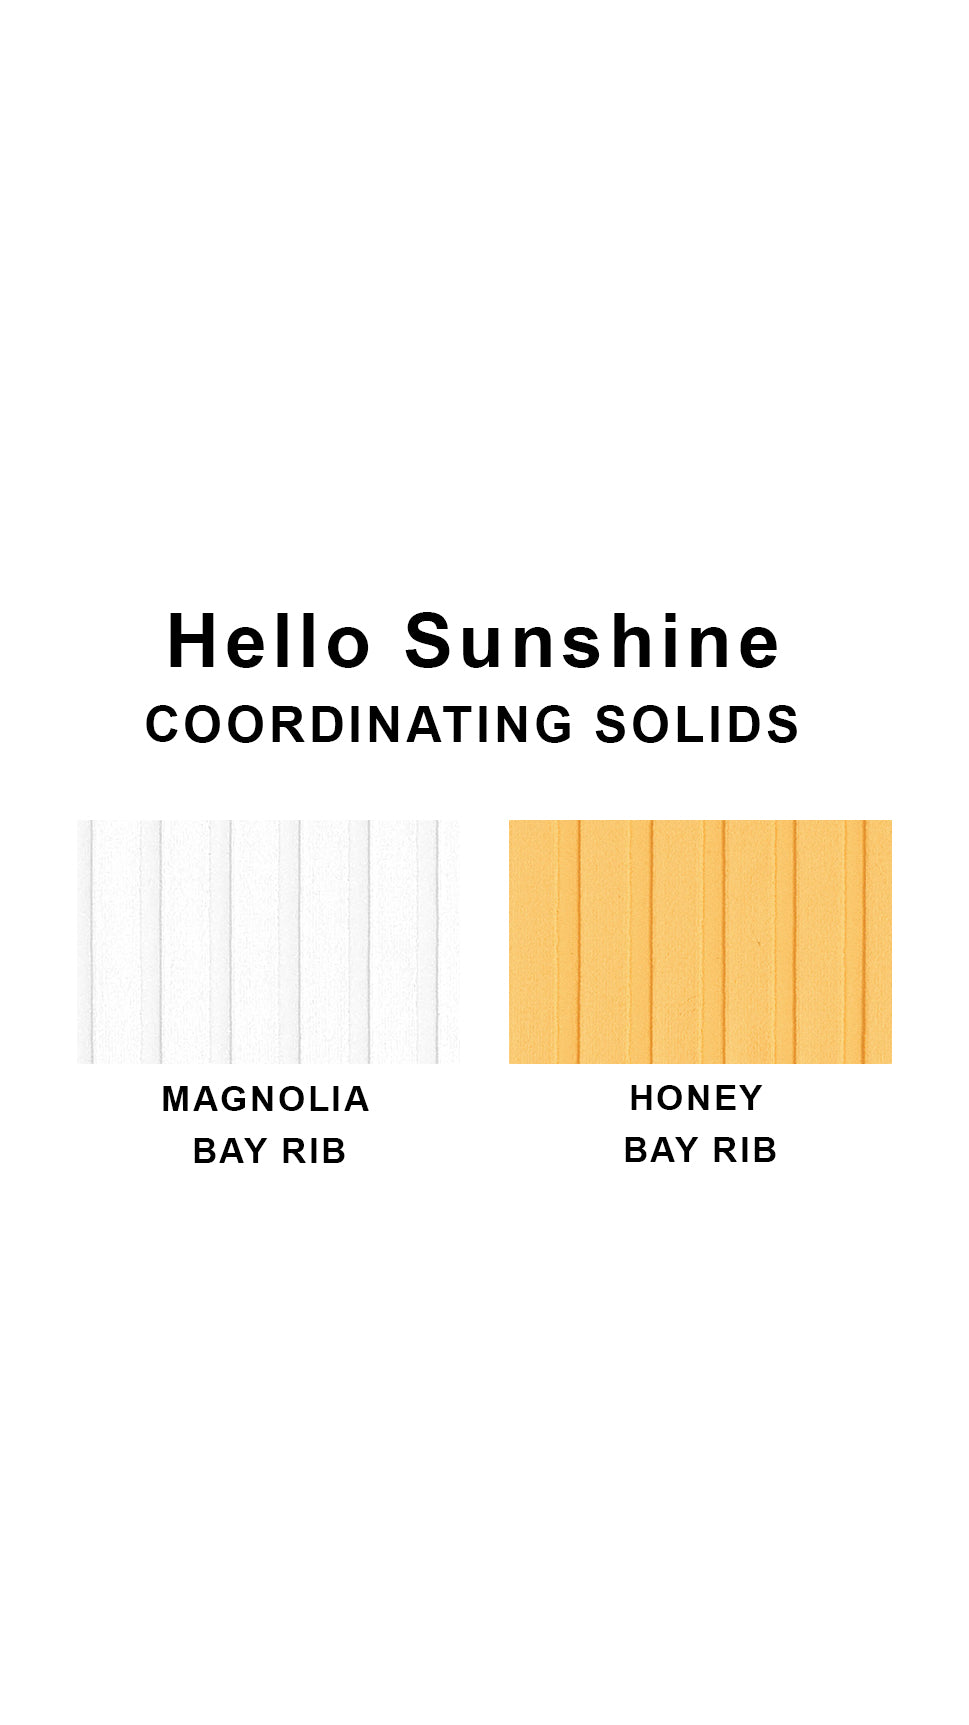 Coordinating solids chart for Hello Sunshine swimsuit print: Magnolia Bay Rib and Honey Bay Rib